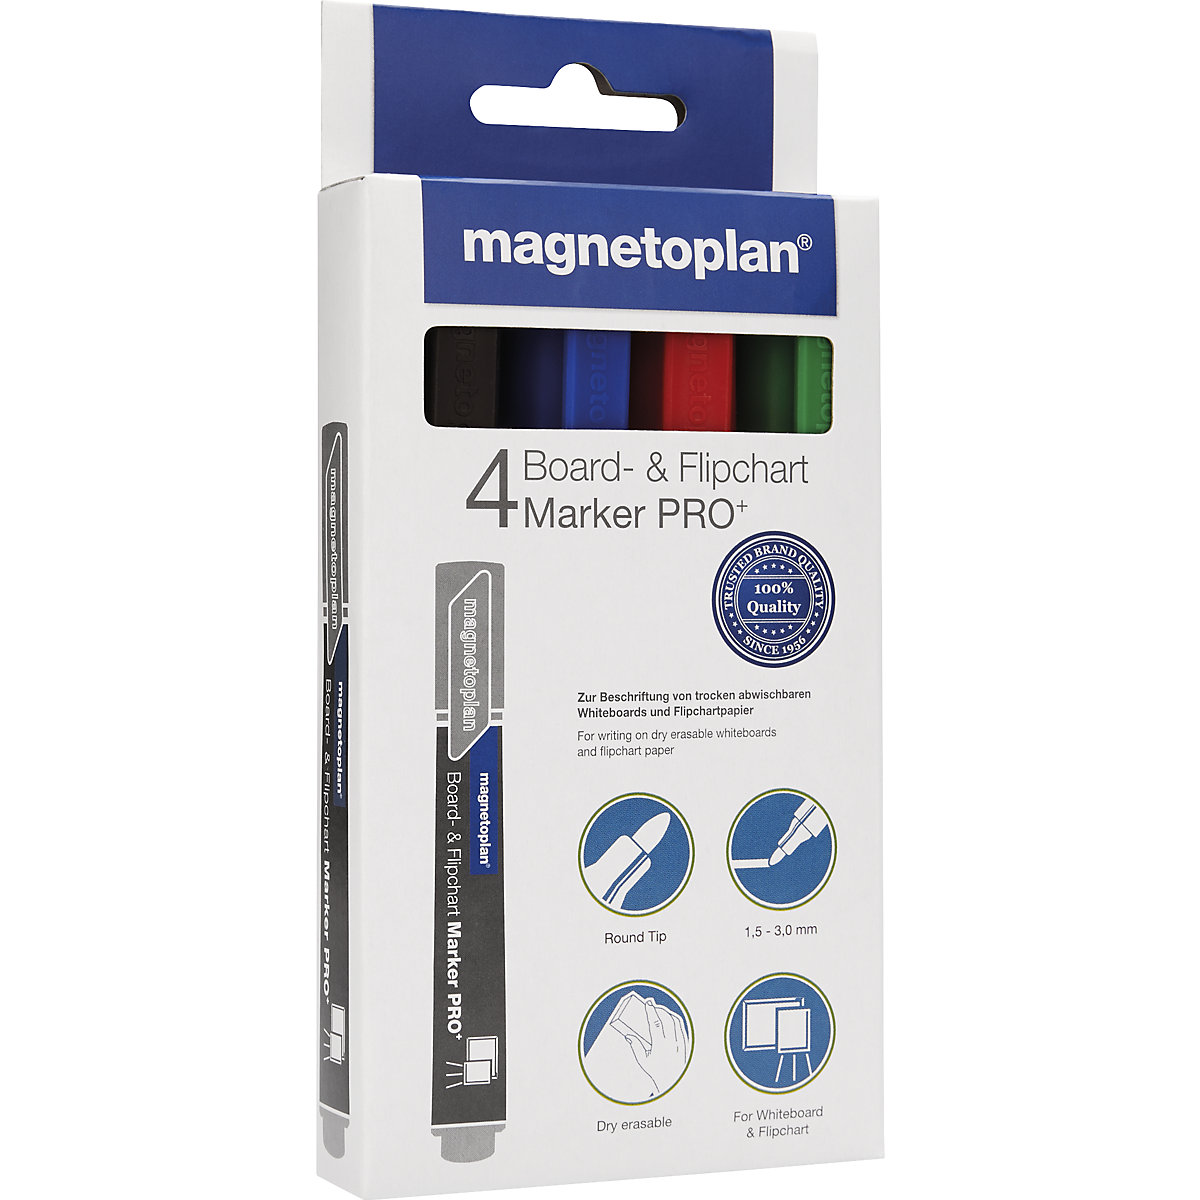 Board markere și markere pentru flipchart, sortate – magnetoplan (Imagine produs 3)-2